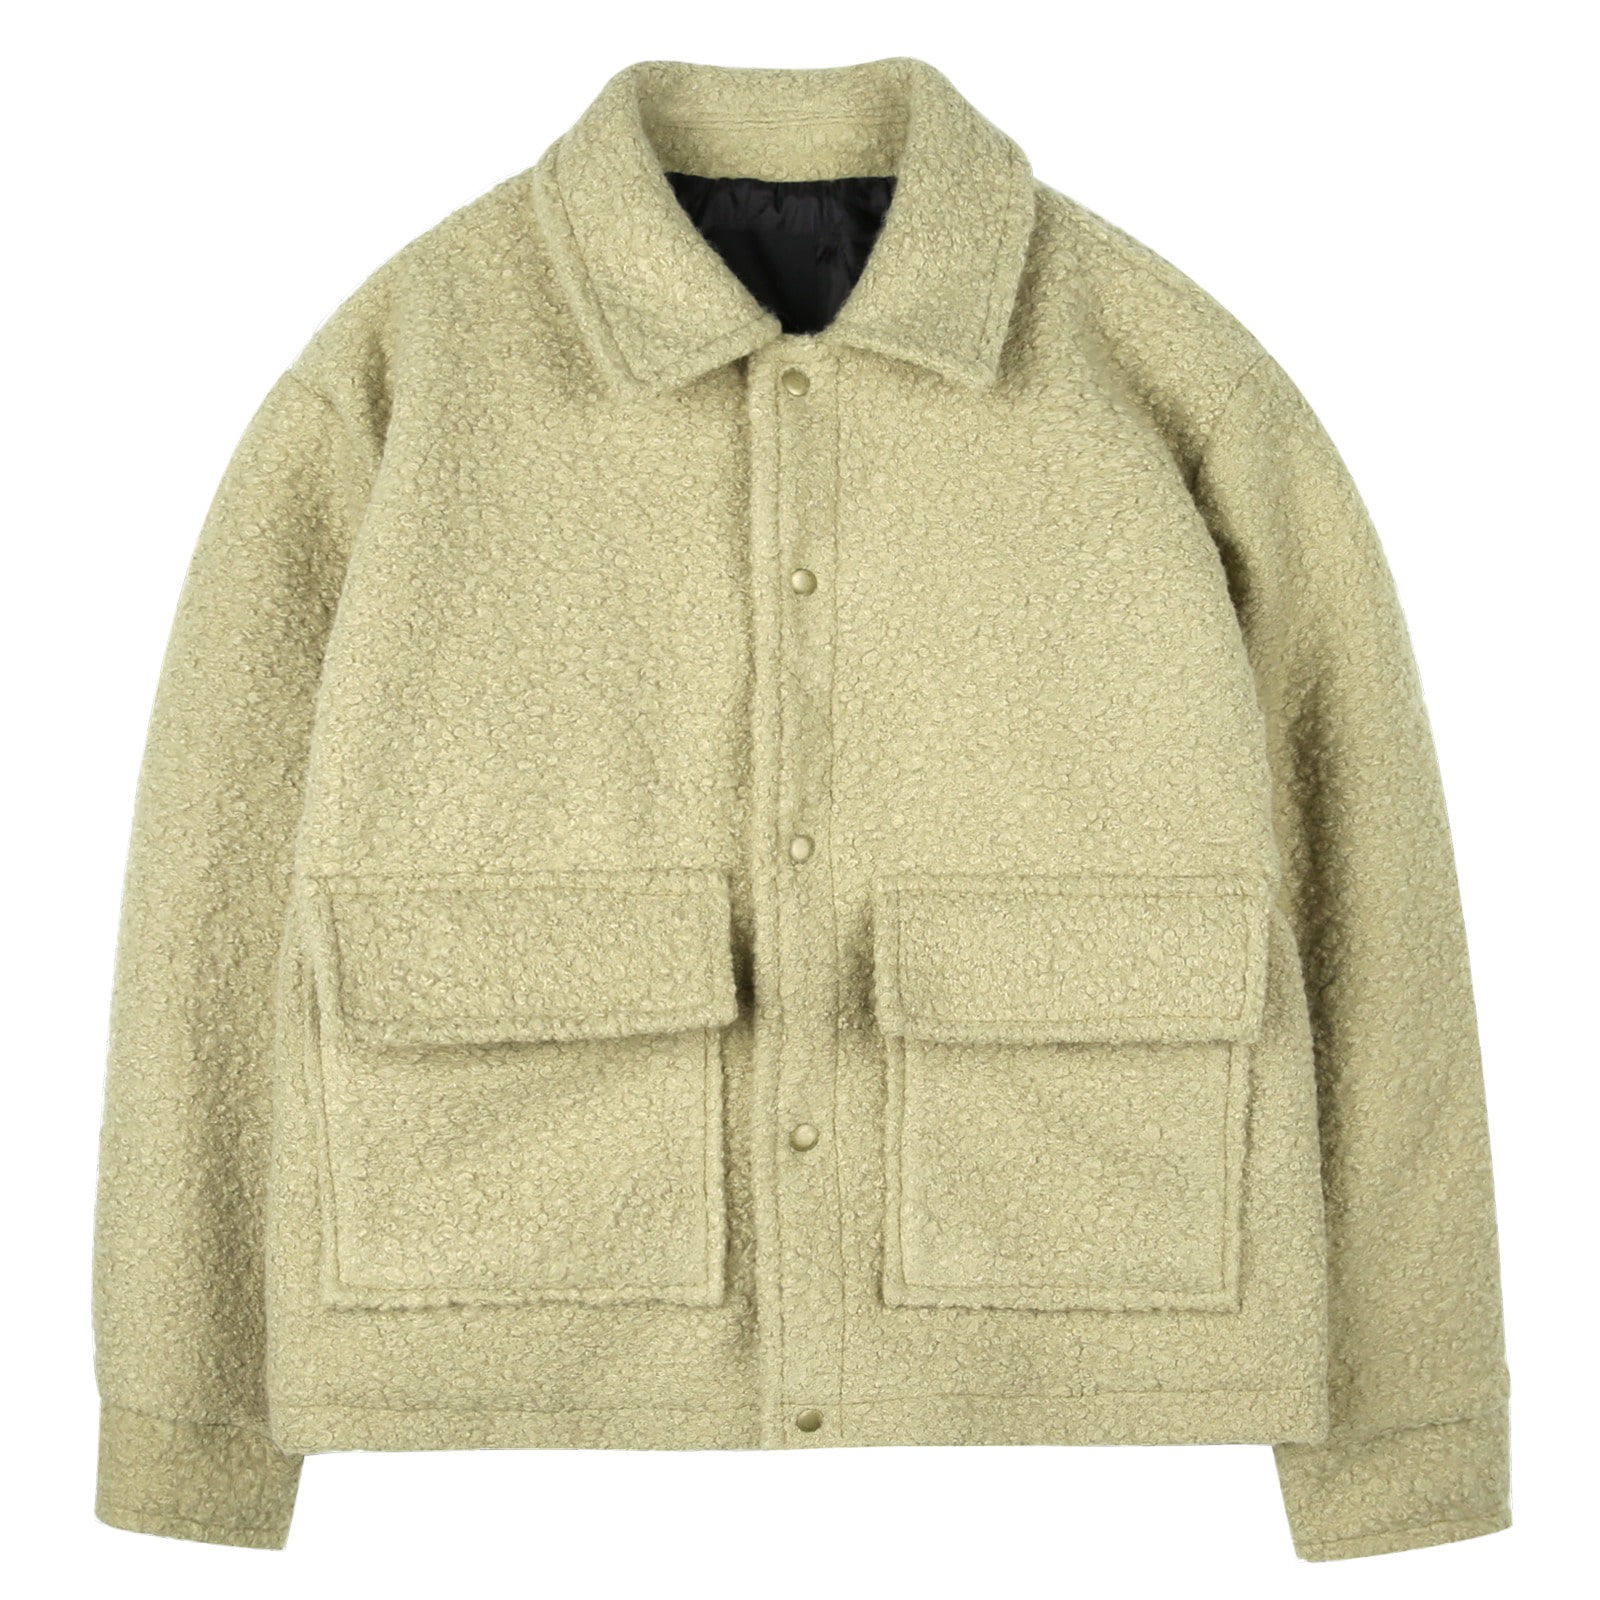 V180 soft terry jacket (khaki beige)